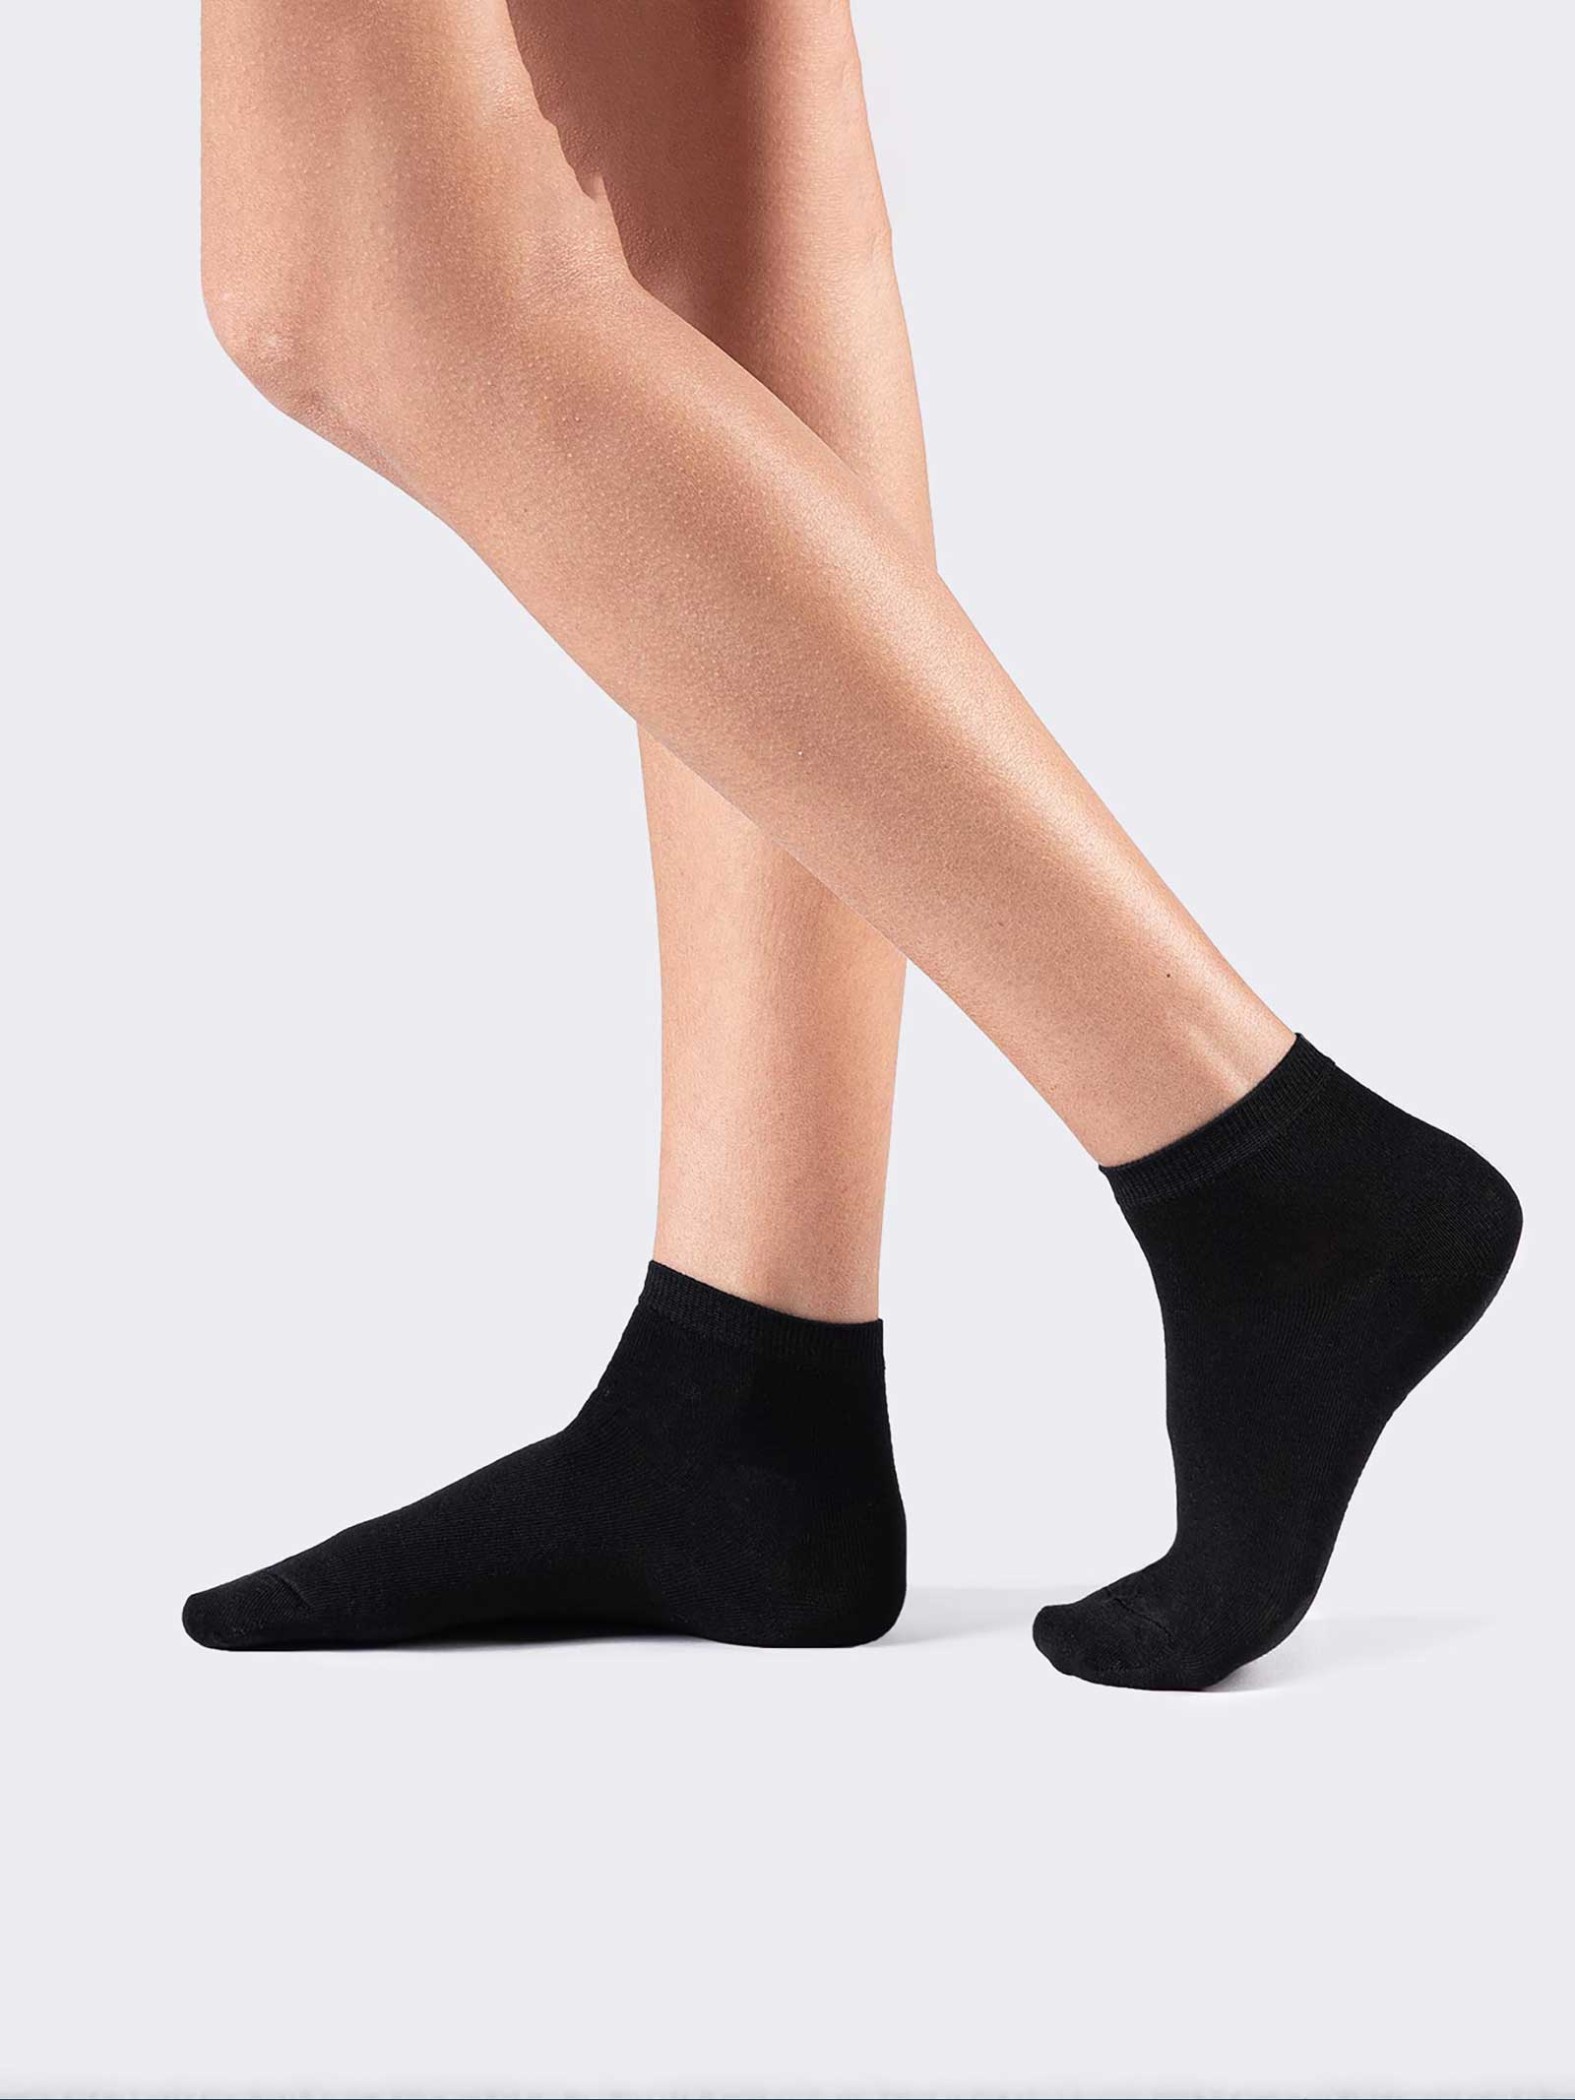 Women's calf socks Fresh Cotton plain